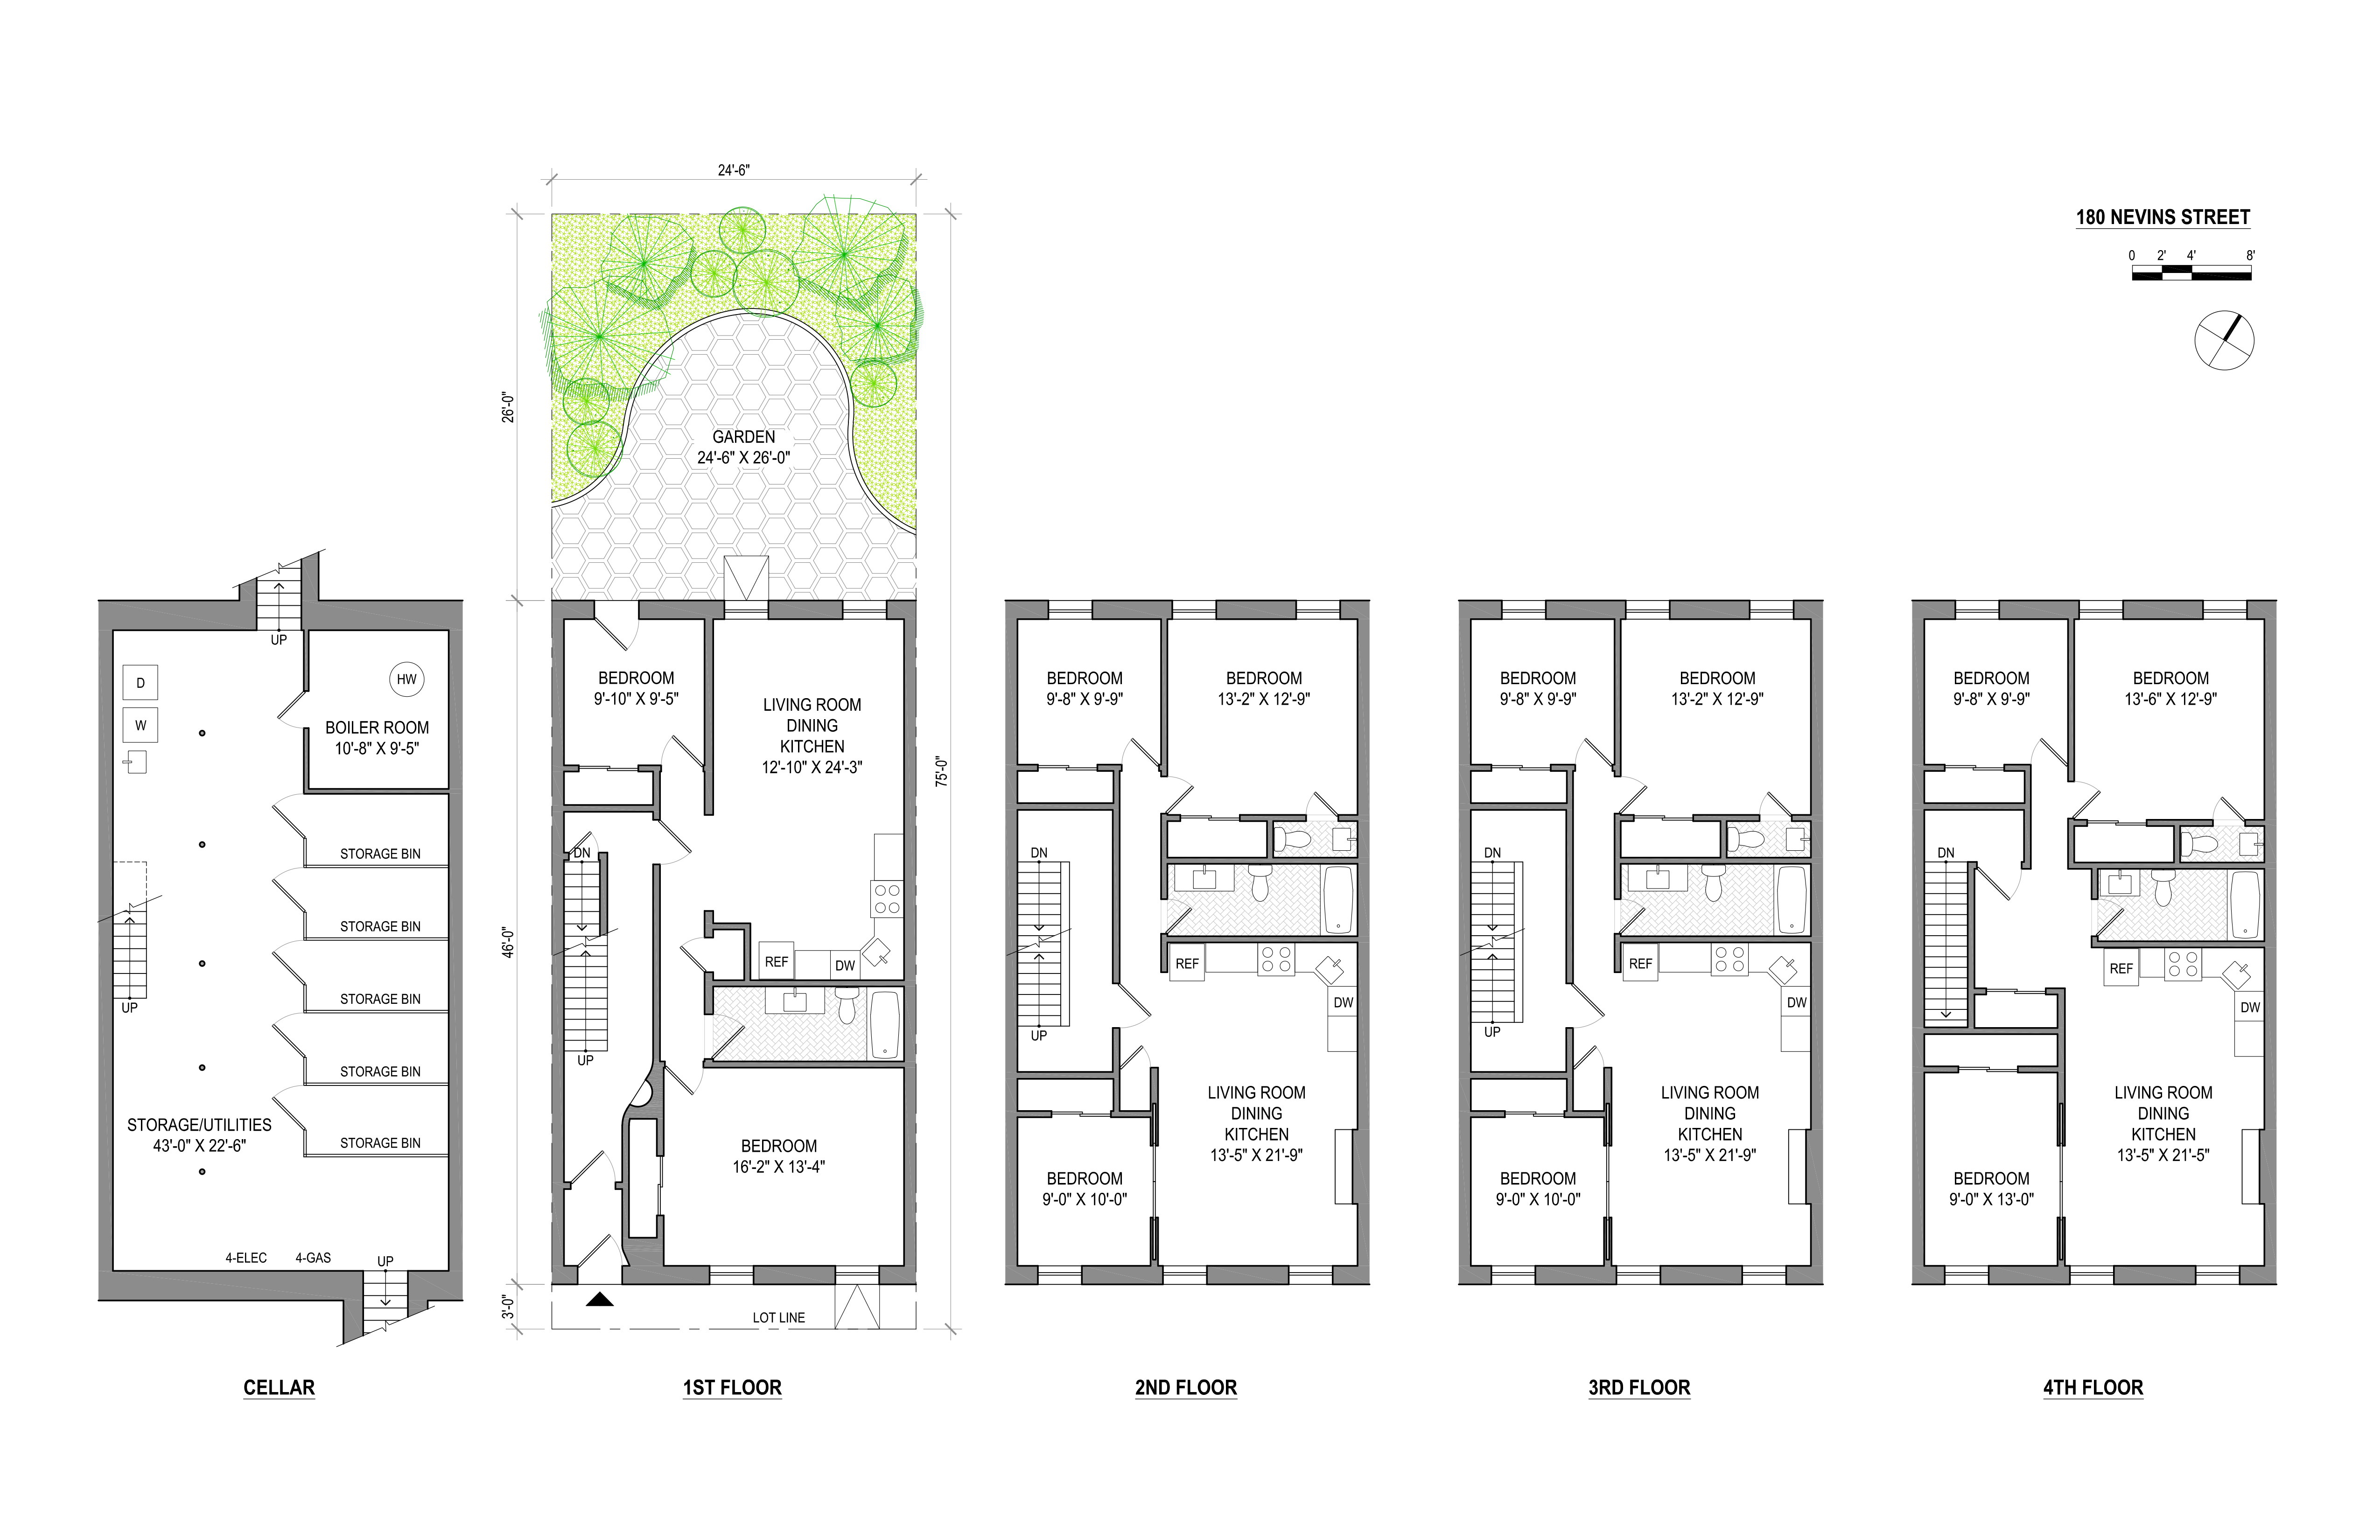 Floorplan for 180 Nevins Street